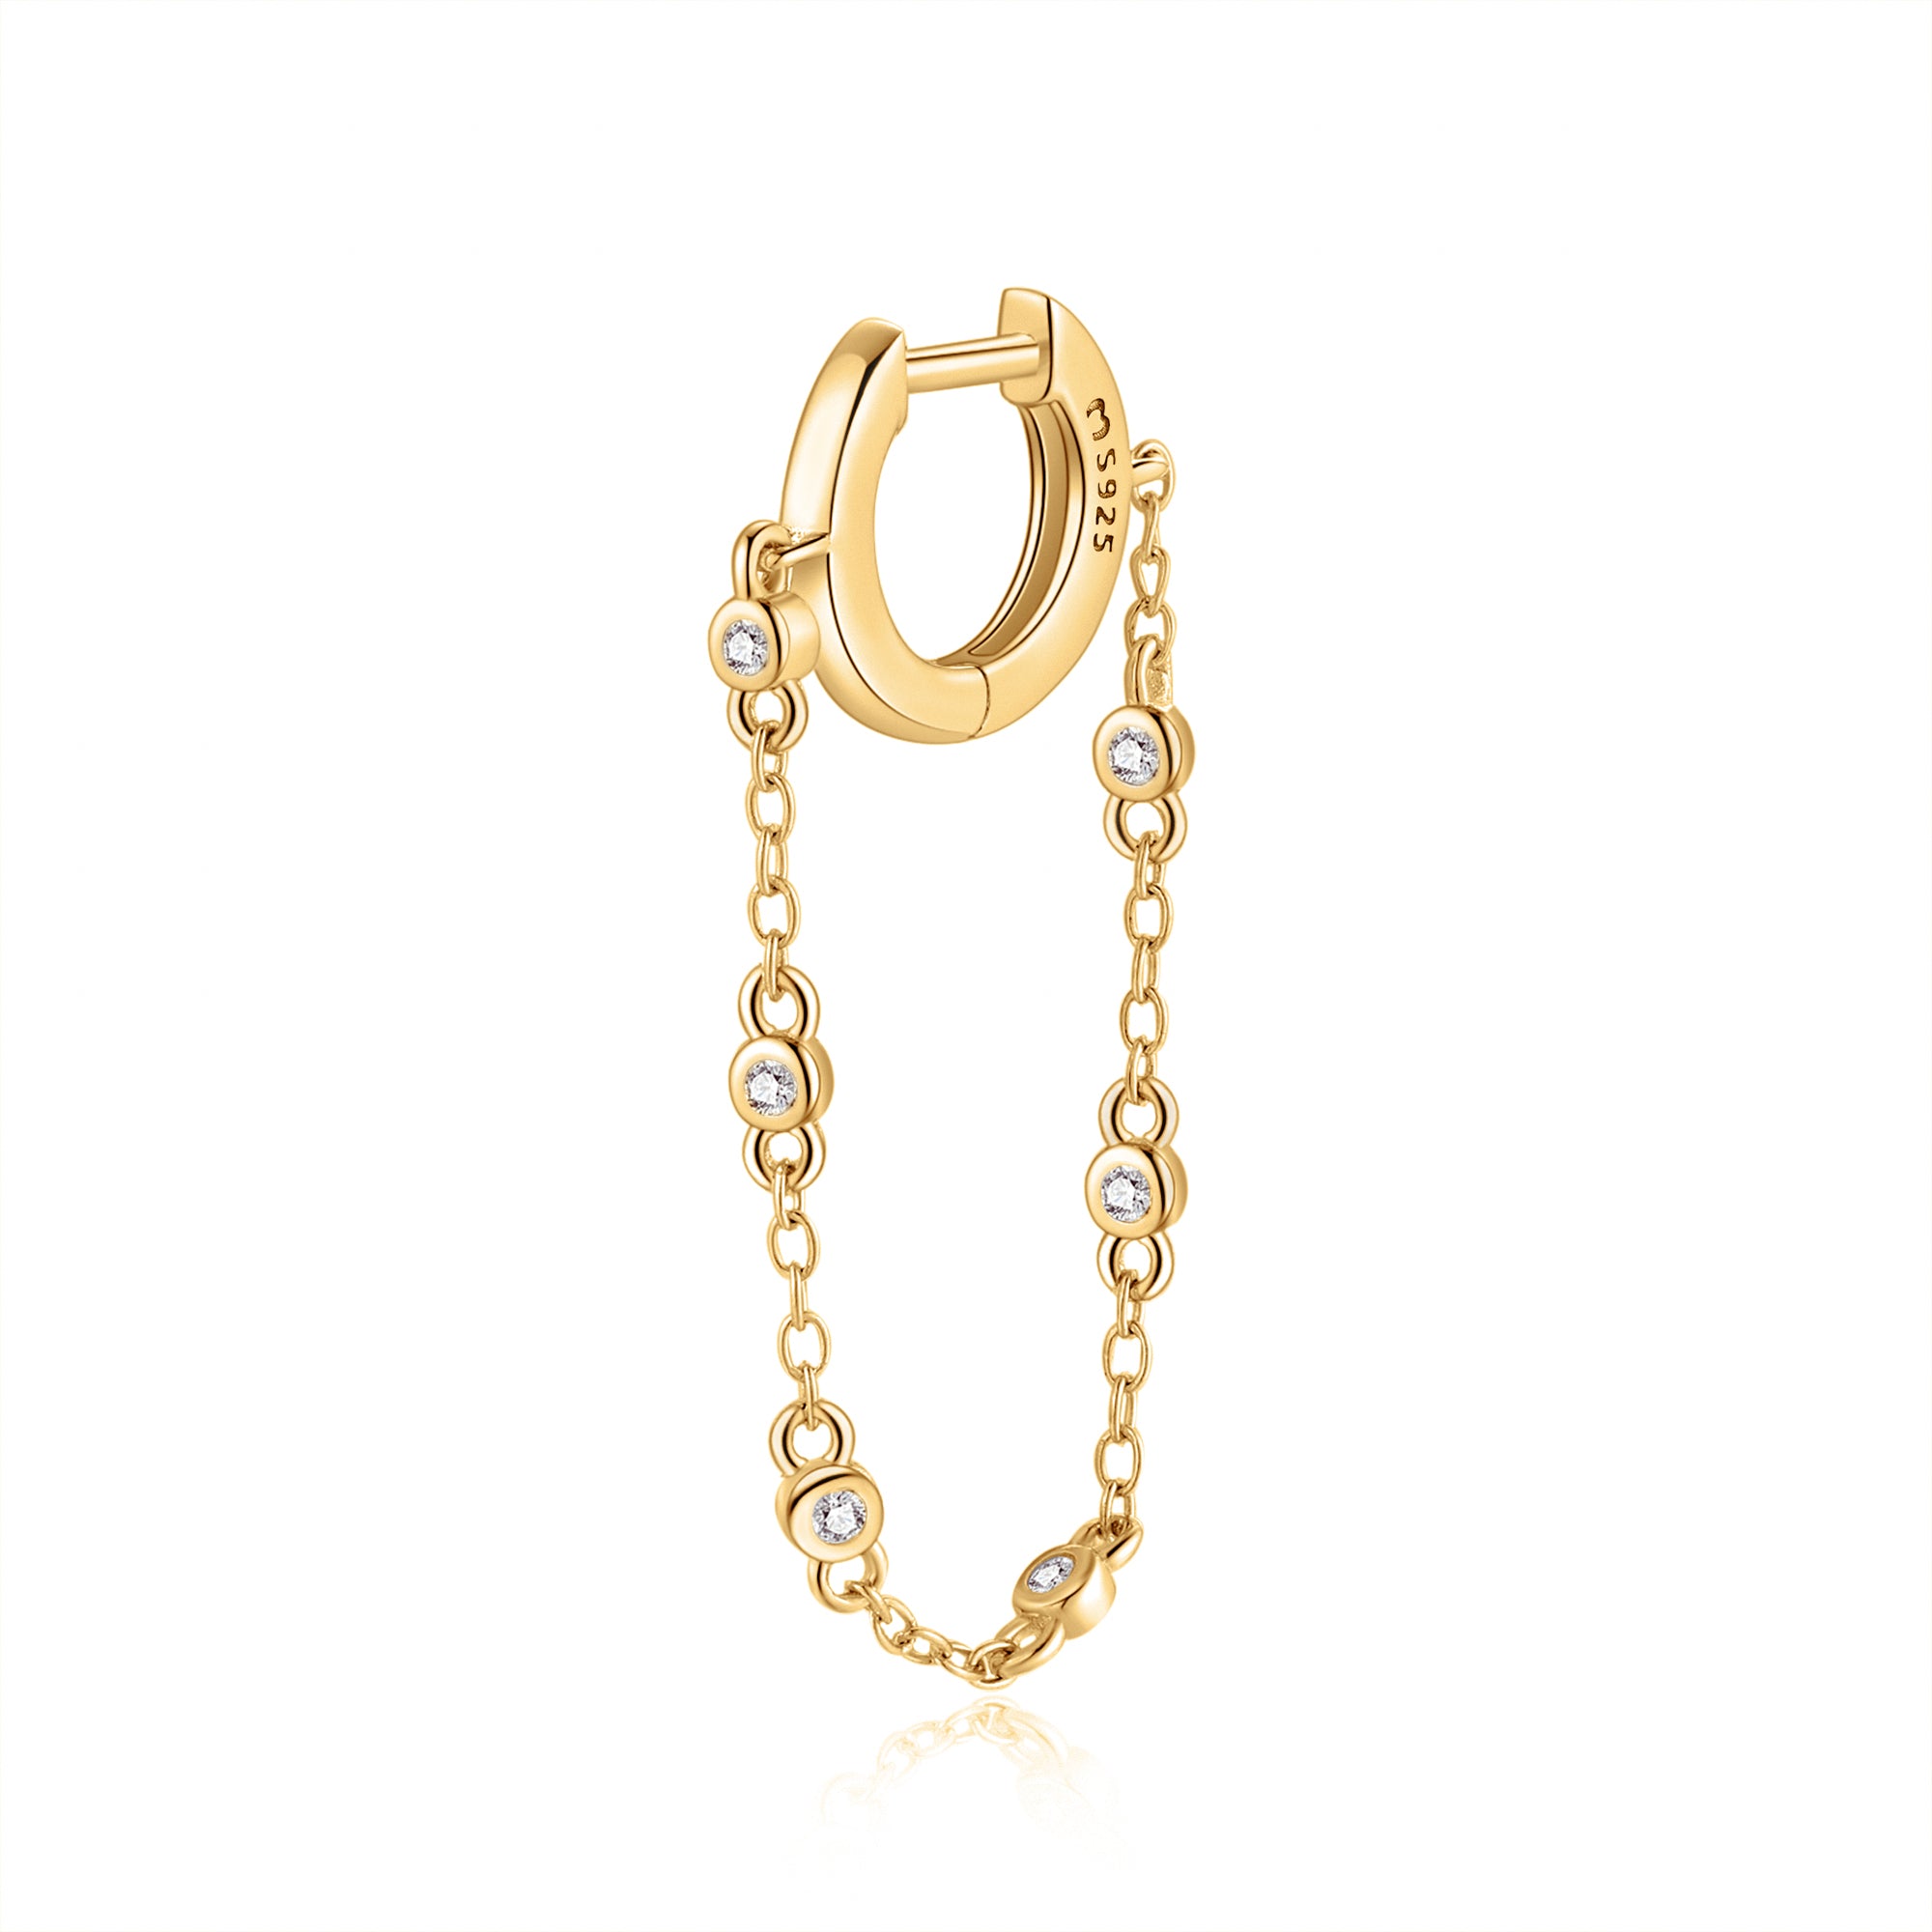 "Ring and Chain" Earrings - SophiaJewels